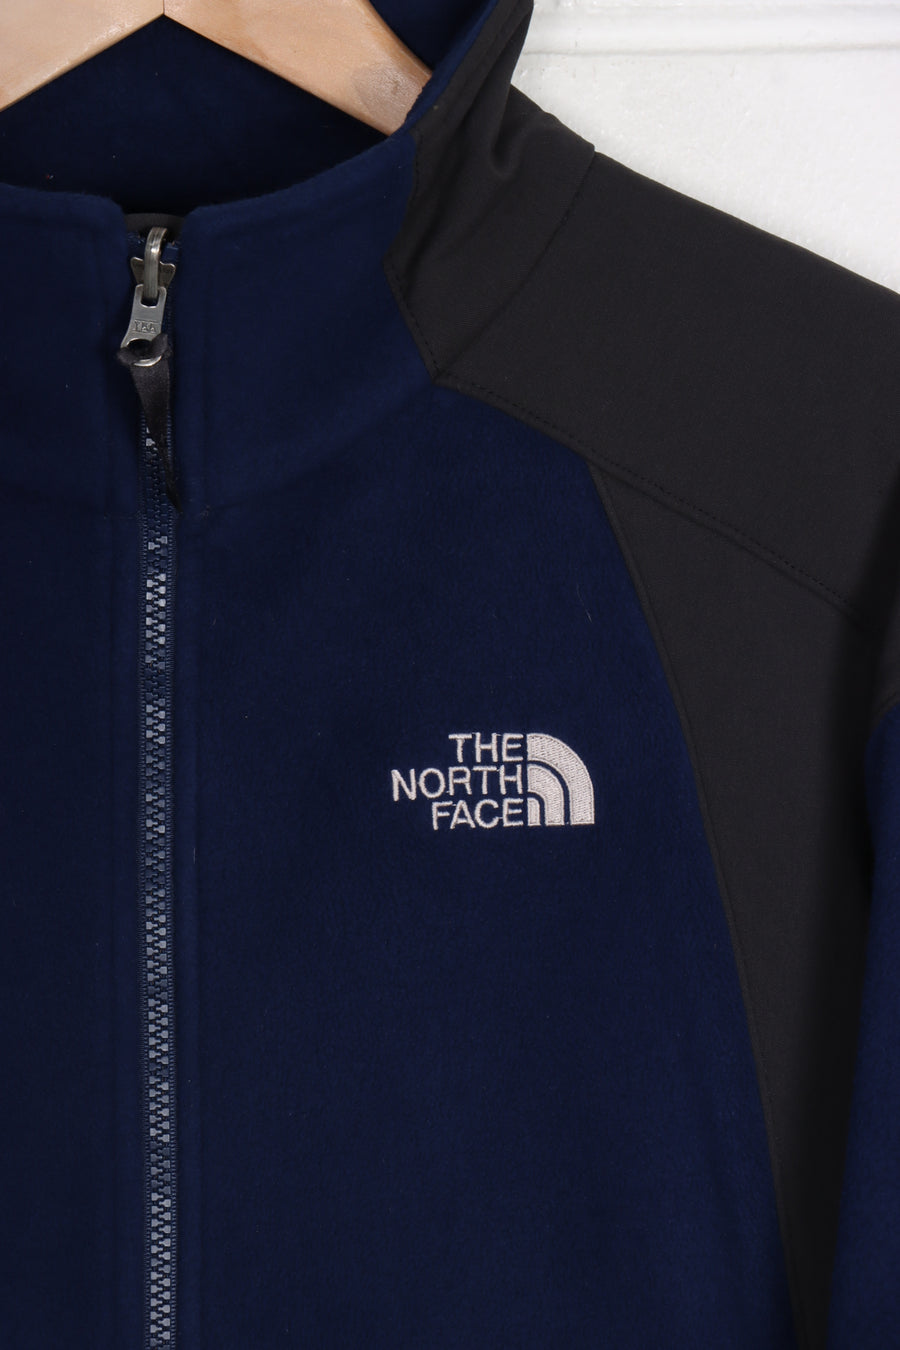 THE NORTH FACE Navy & Black Zip Up Fleece (XL)